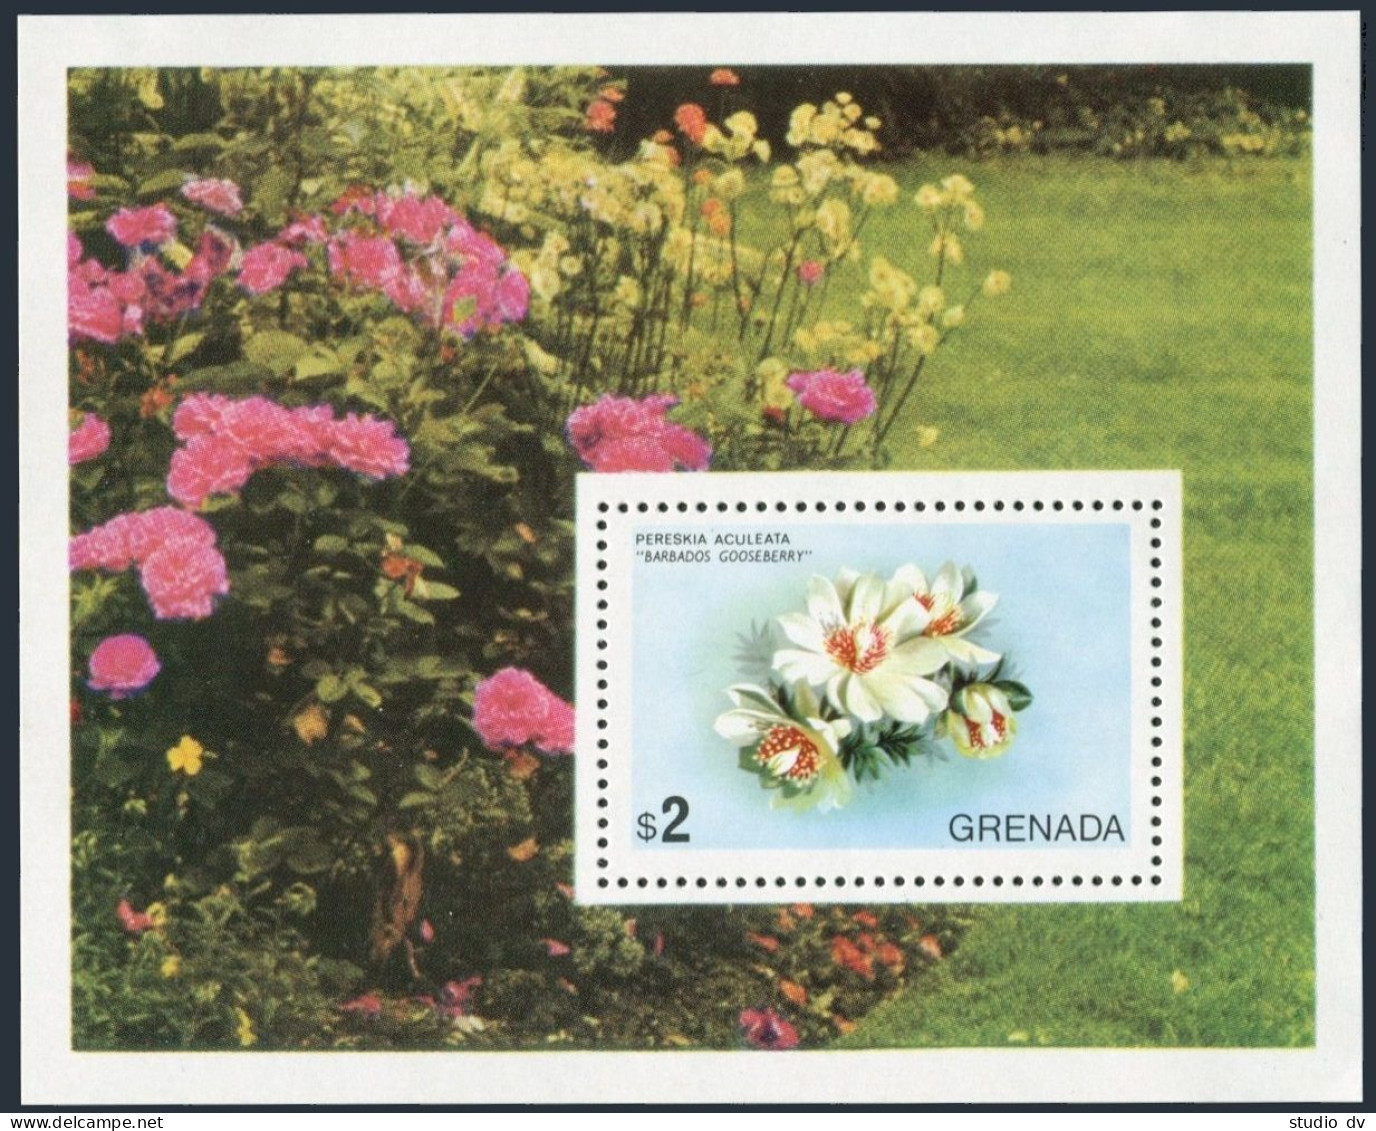 Grenada 620, MNH. Michel 647 Bl.40. Flowers Of Grenada, 1975. - Grenada (1974-...)